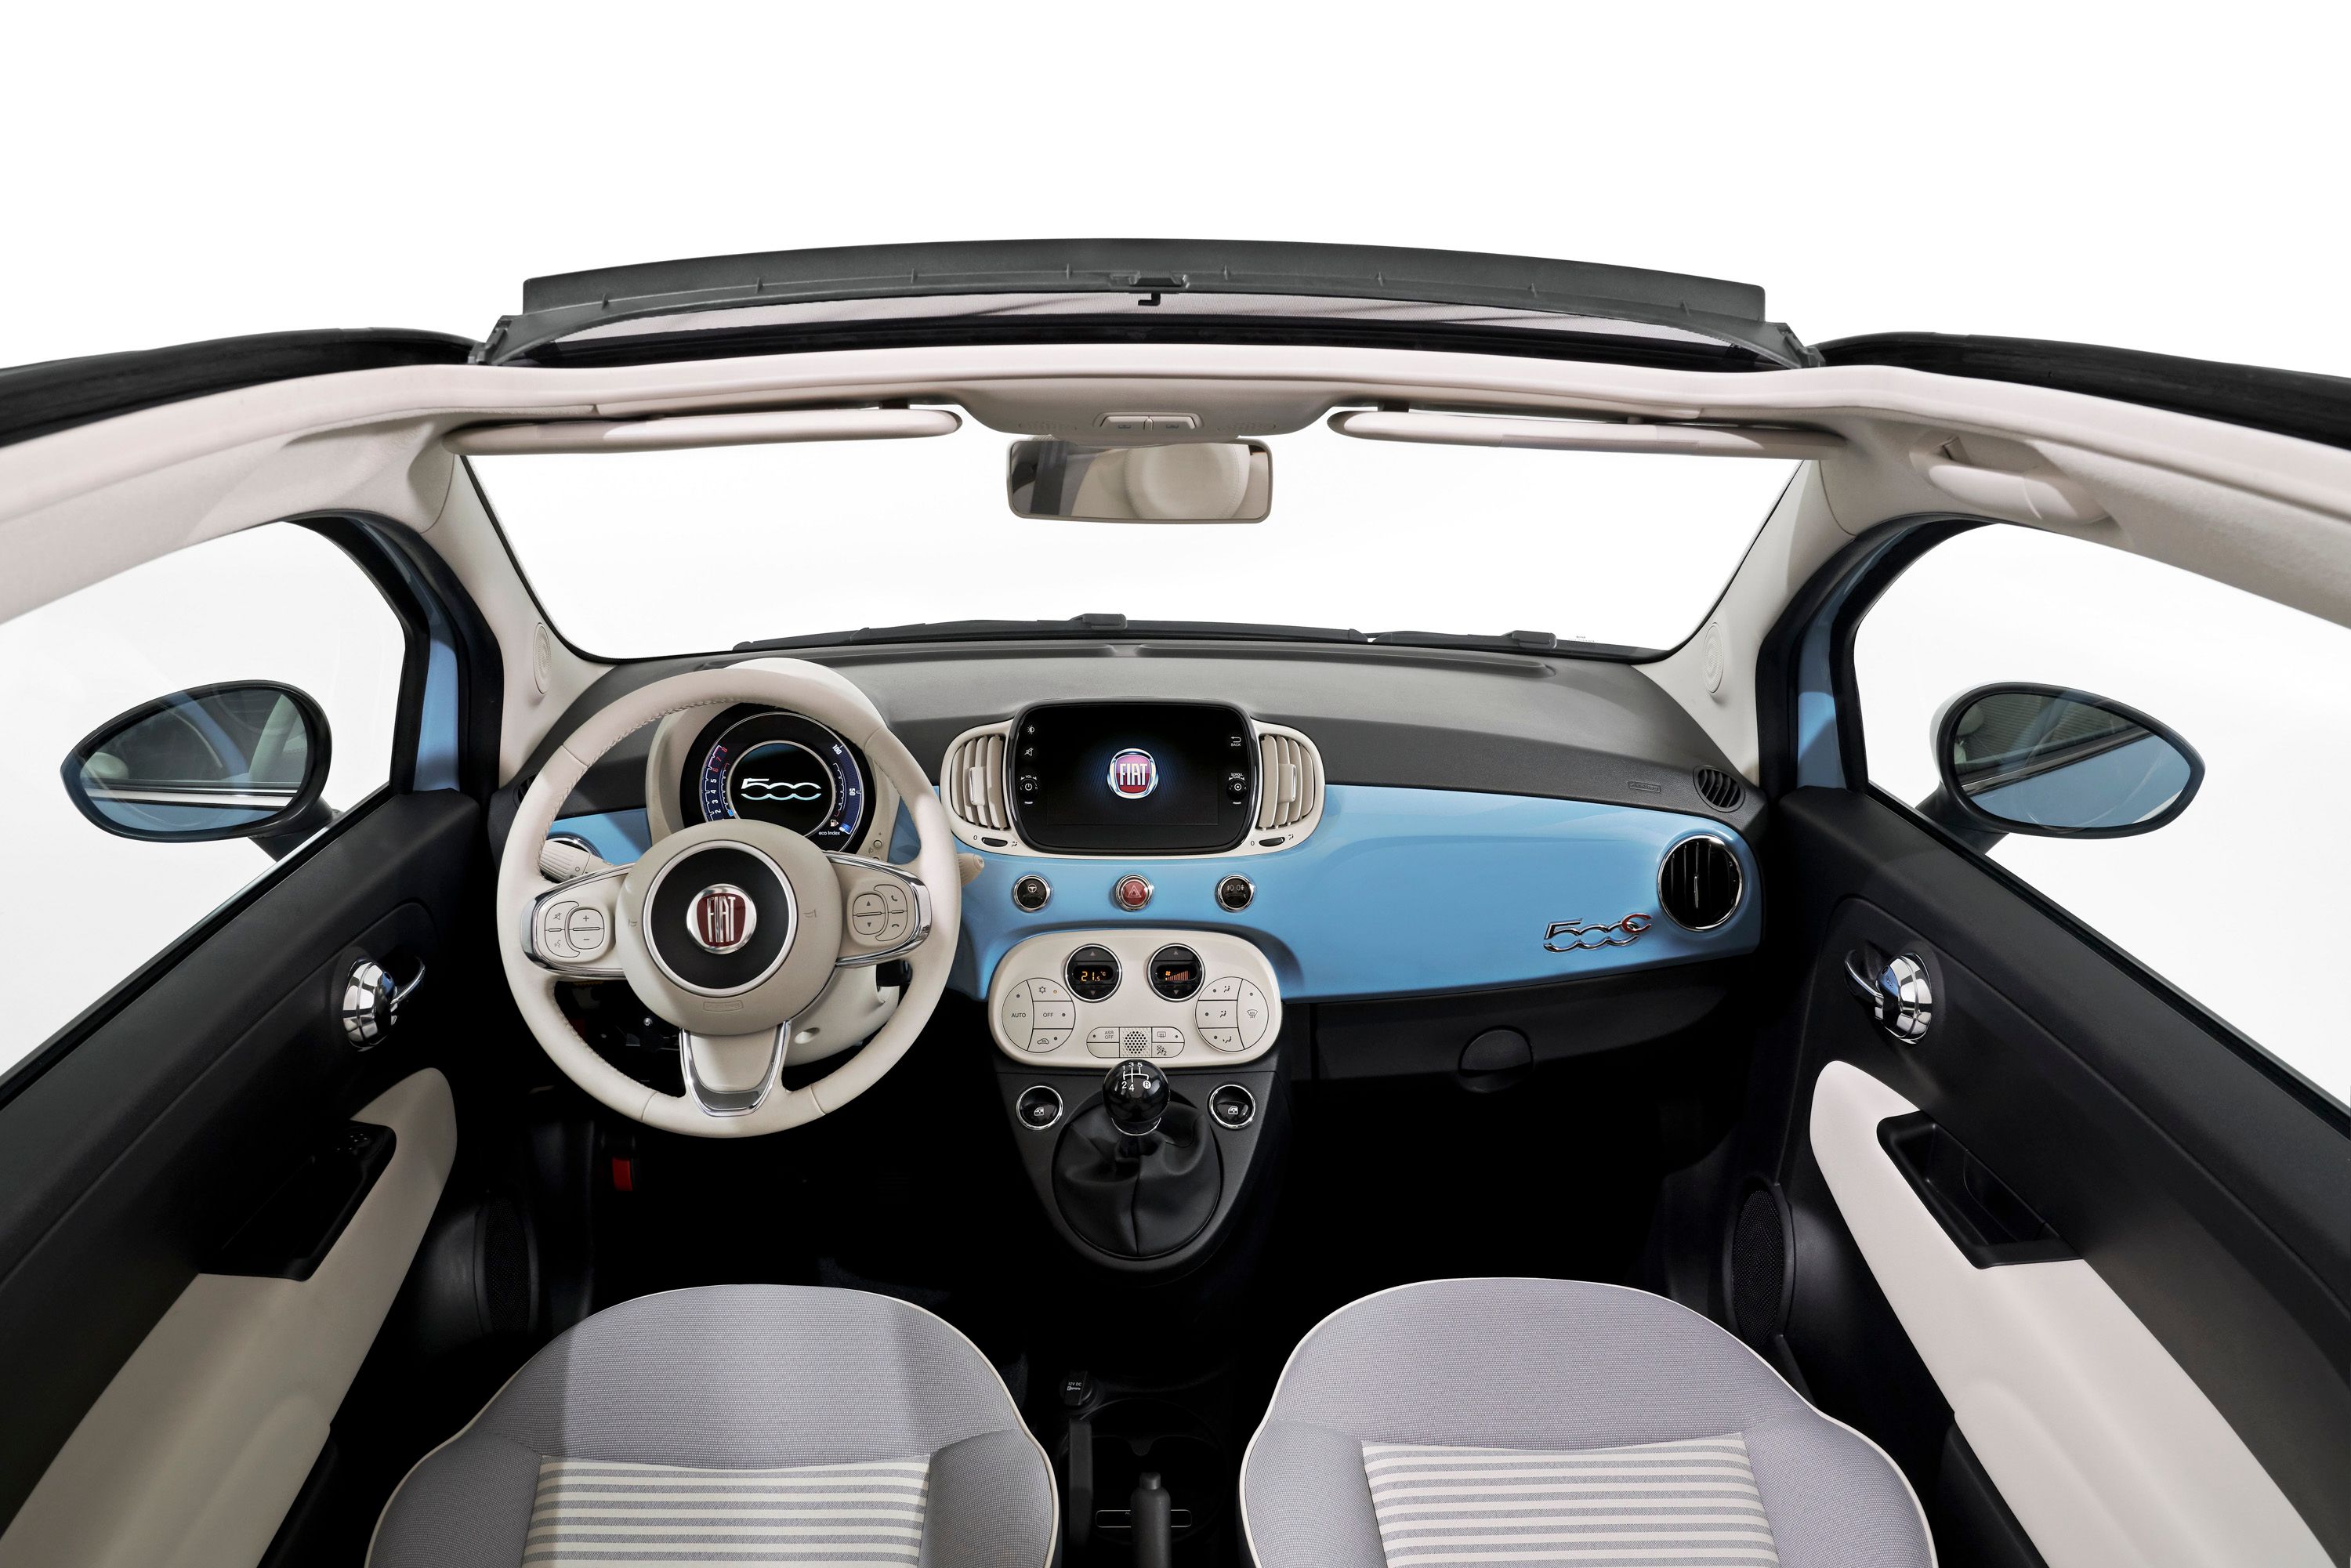 2018 Fiat 500 Spiaggina by Garage Italia and Pinninfarina